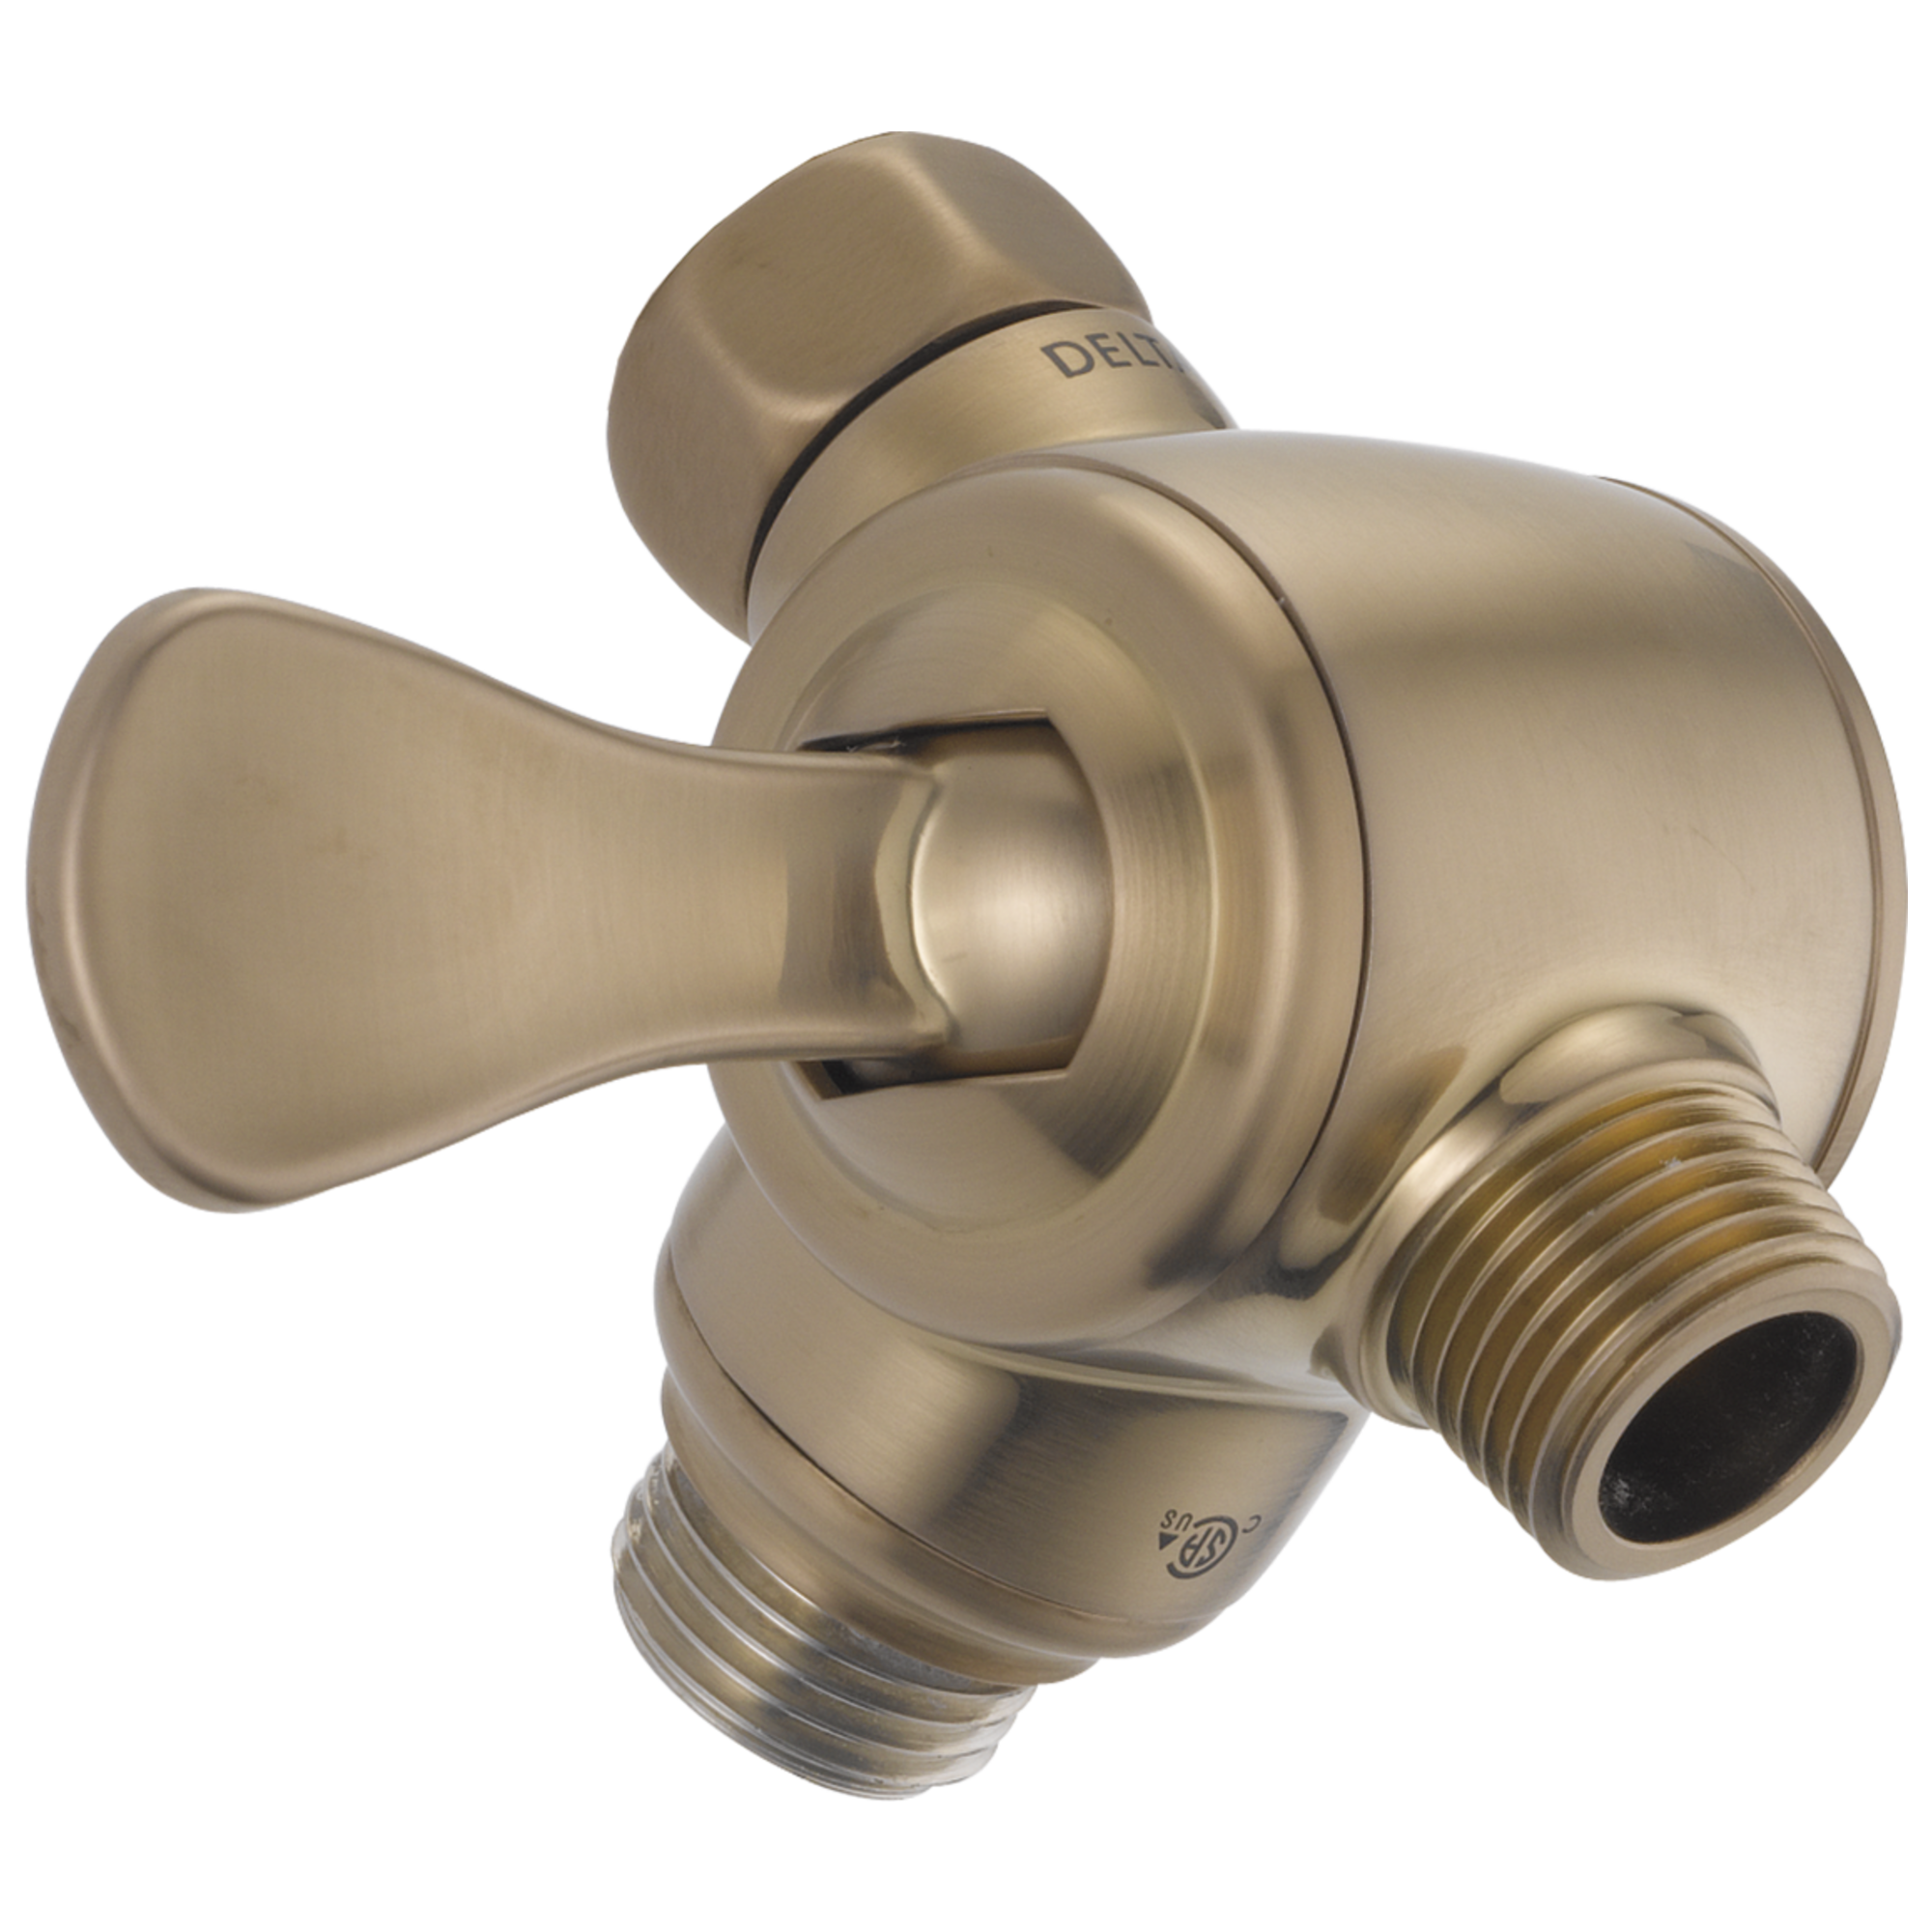 Bathroom Universal Shower Arm Diverter for Handheld Shower and Shower Head TOPINCN 3-Way Shower Head Diverter Valve 